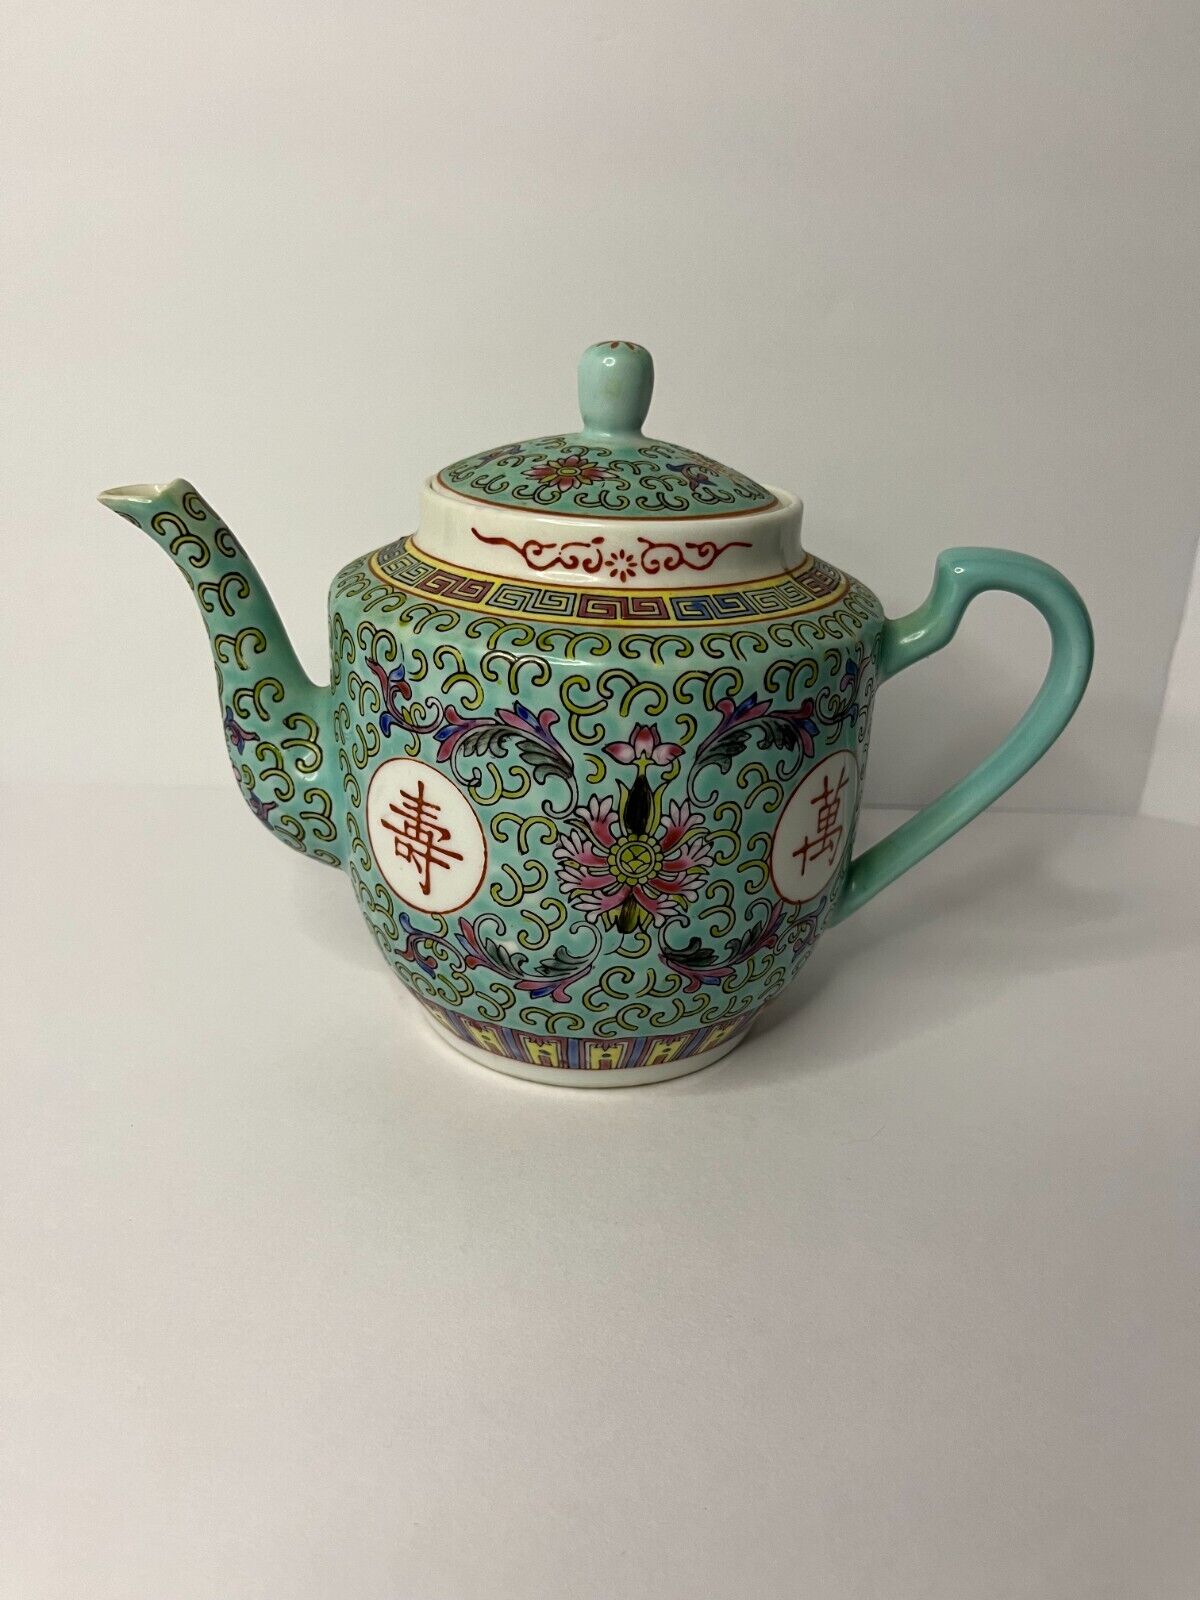 VTG Chinese Porcelain Teapot, Turquoise Blue w/ Mun Shou Longevity Symbols -13-